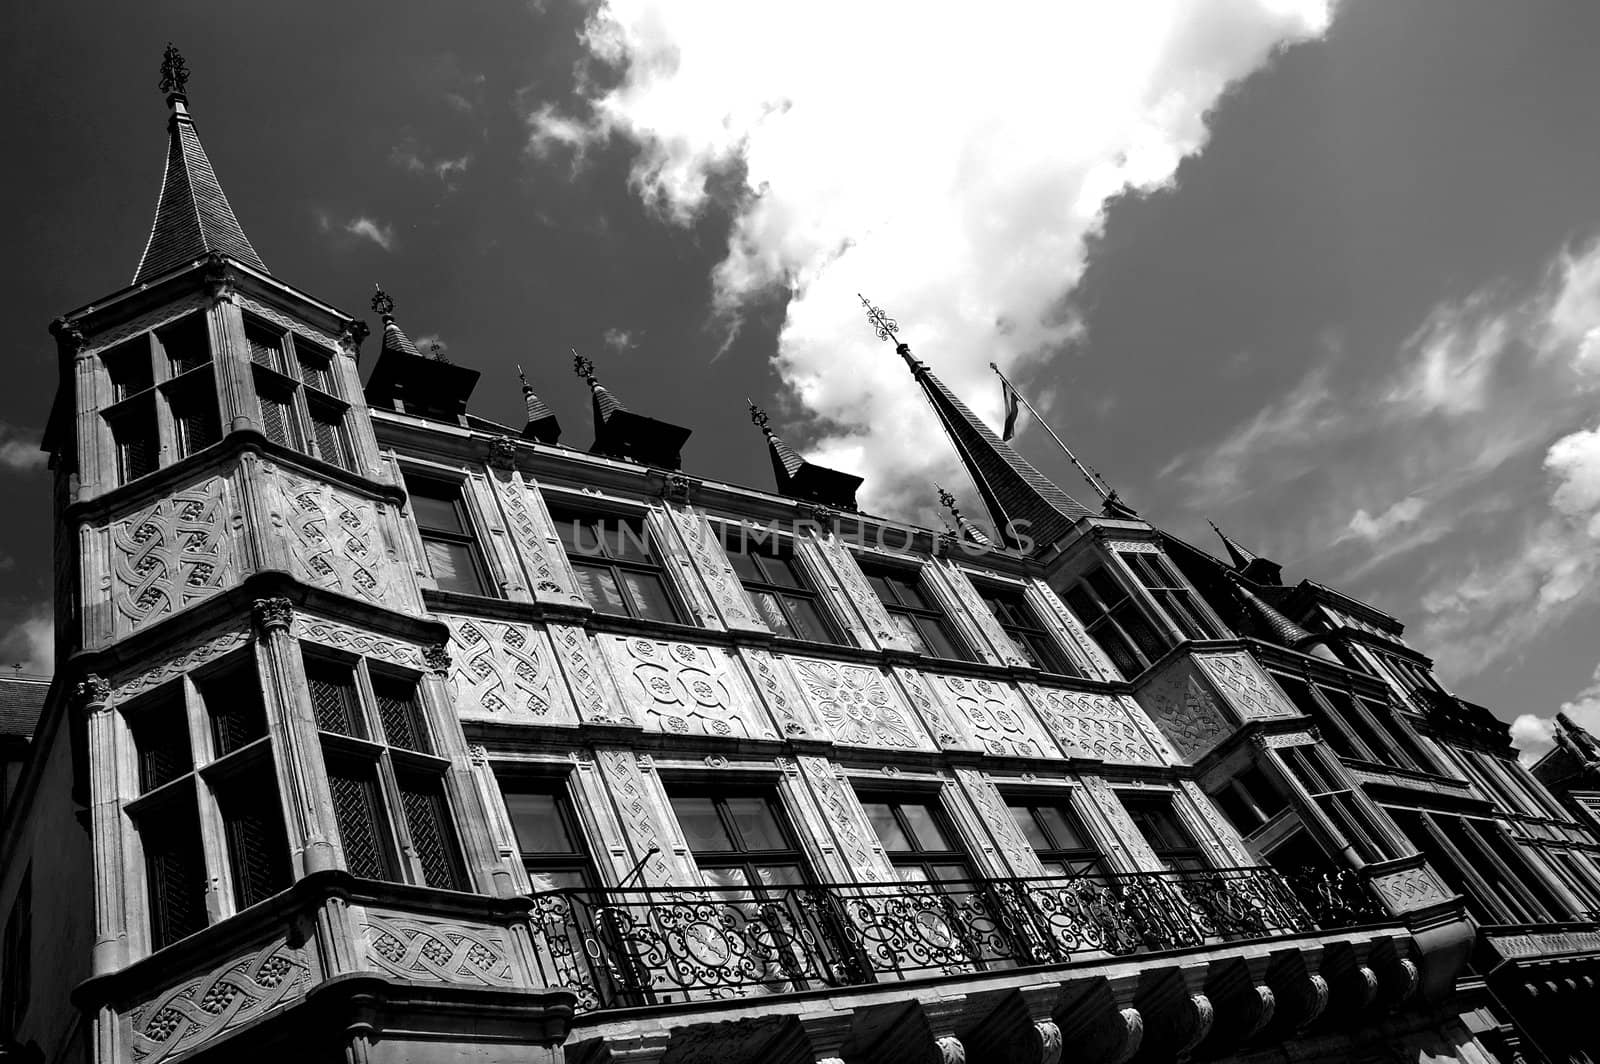 Architecture in Belgium taken with a Nikon.